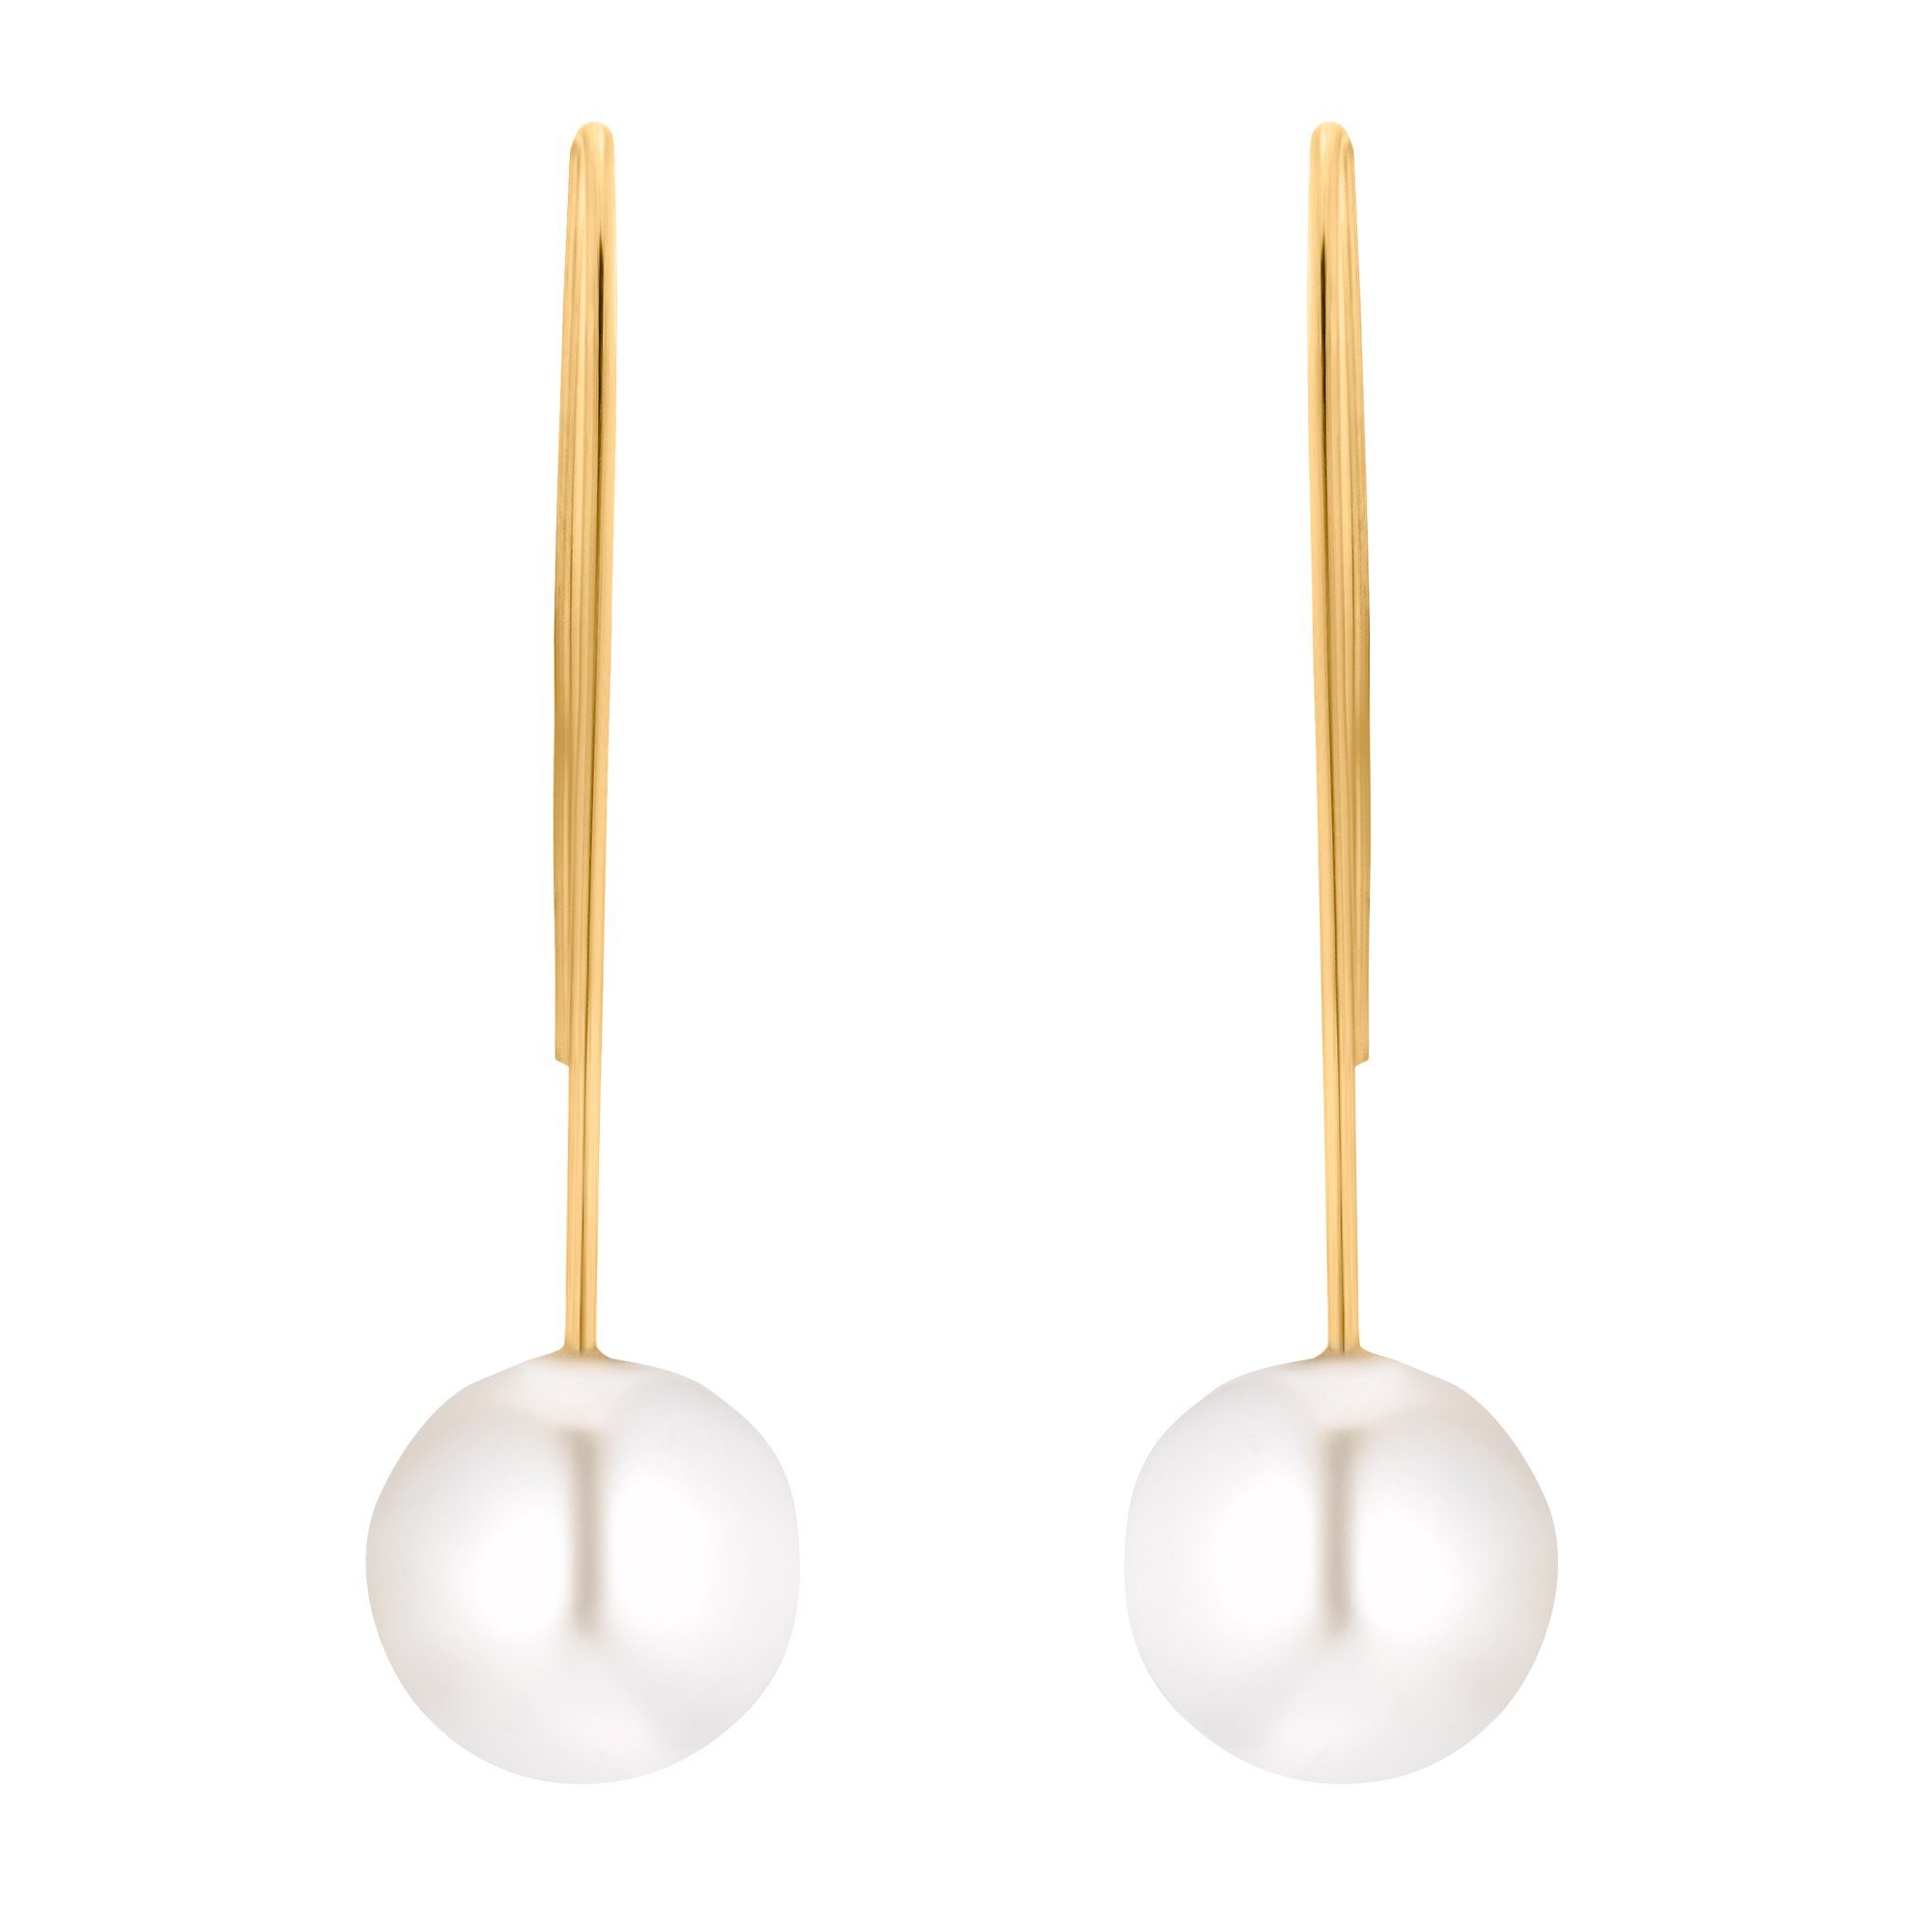 Heideman Paar Ohrstecker Auris goldfarben (Ohrringe, inkl. Geschenkverpackung), Perlenohrringe mit Perle weiß oder farbig | Ohrstecker